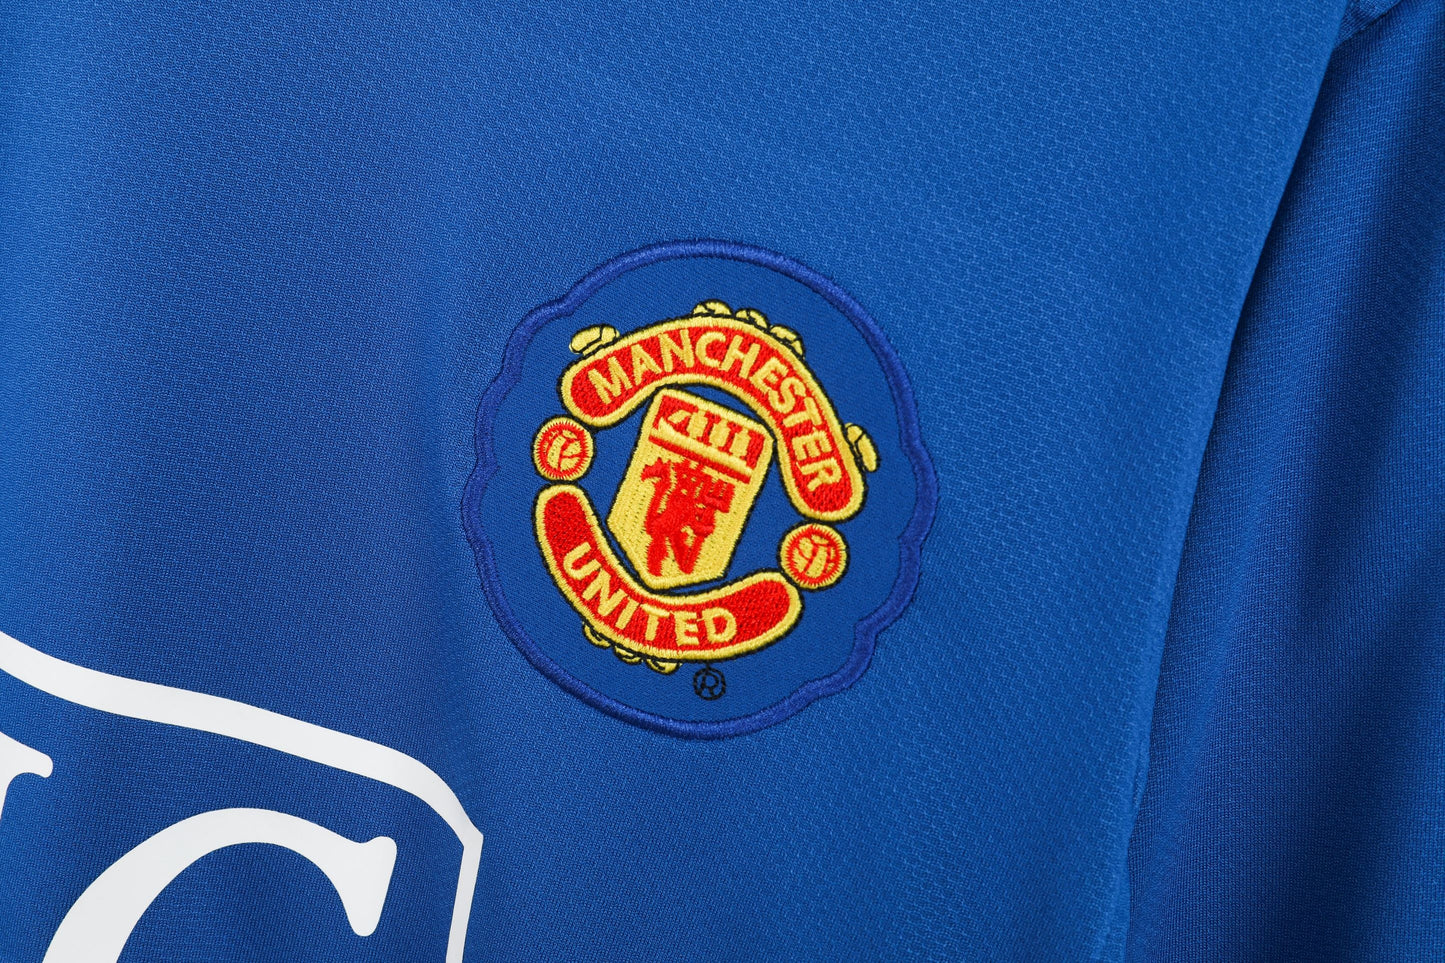 2007/08 season Manchester United long sleeve away shirt